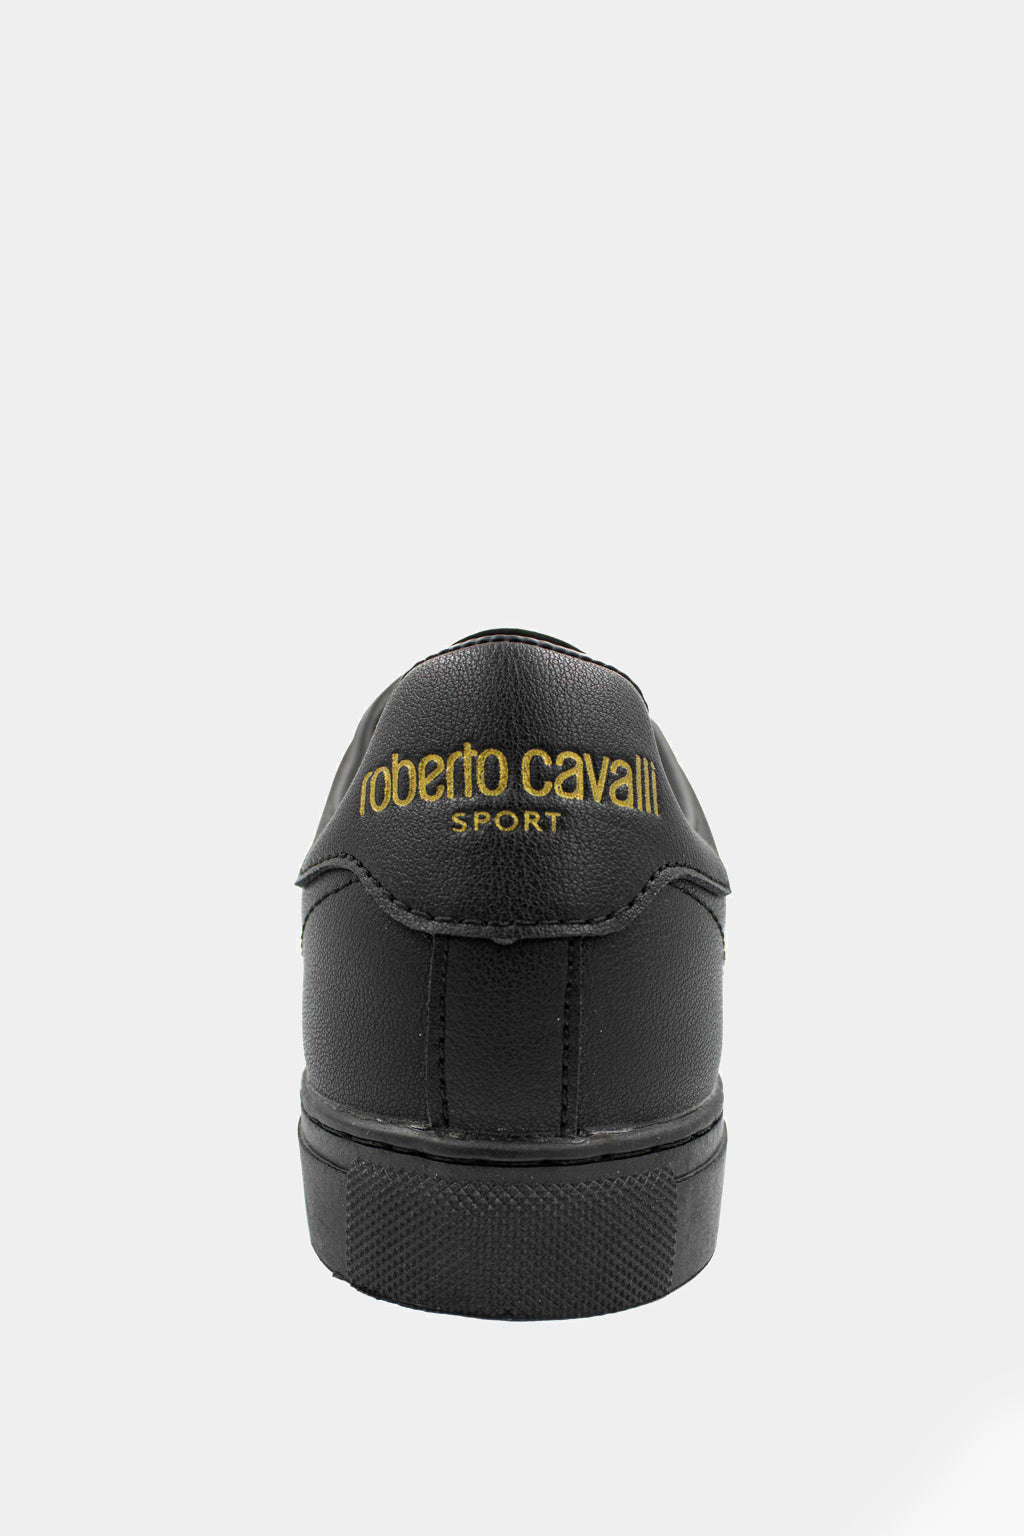 Roberto Cavalli - Glam lth Shoes